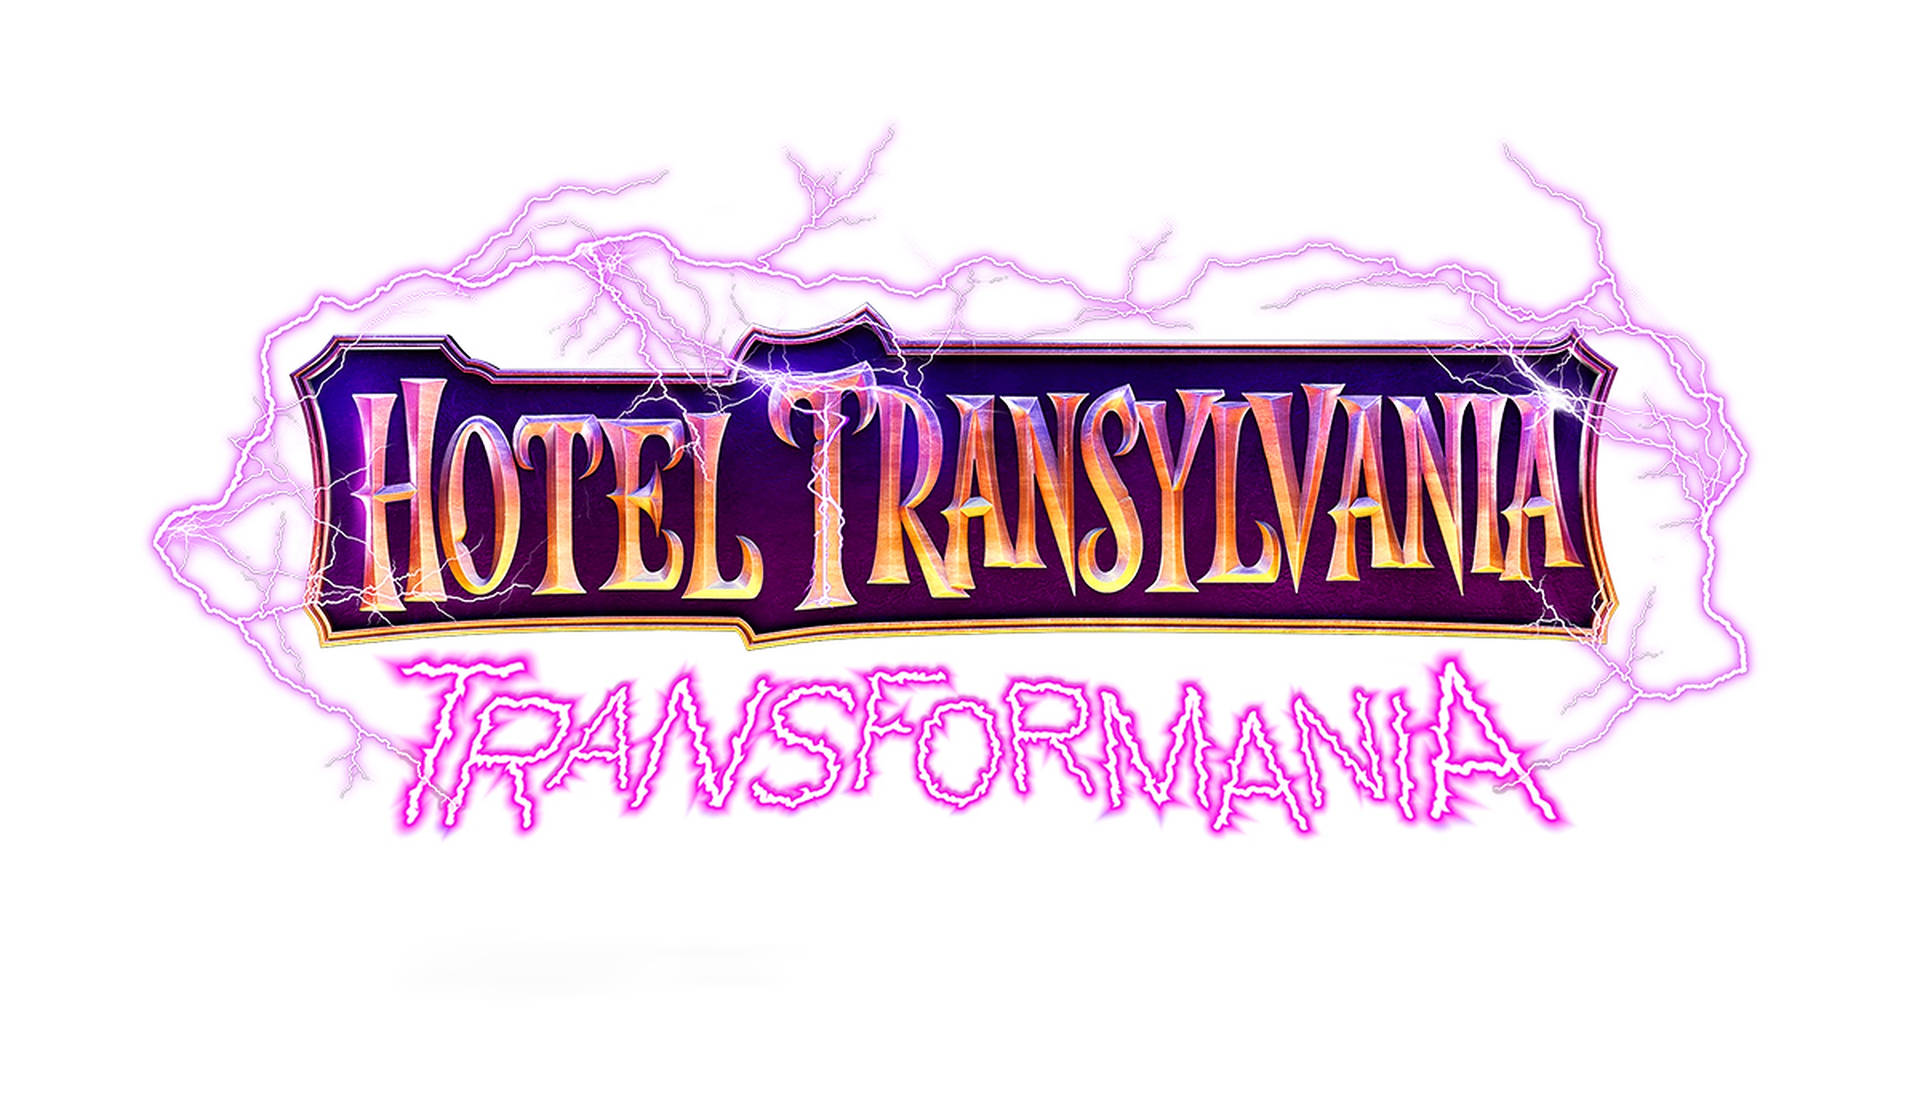 Top 999+ Hotel Transylvania Transformania Wallpaper Full HD, 4K✅Free to Use